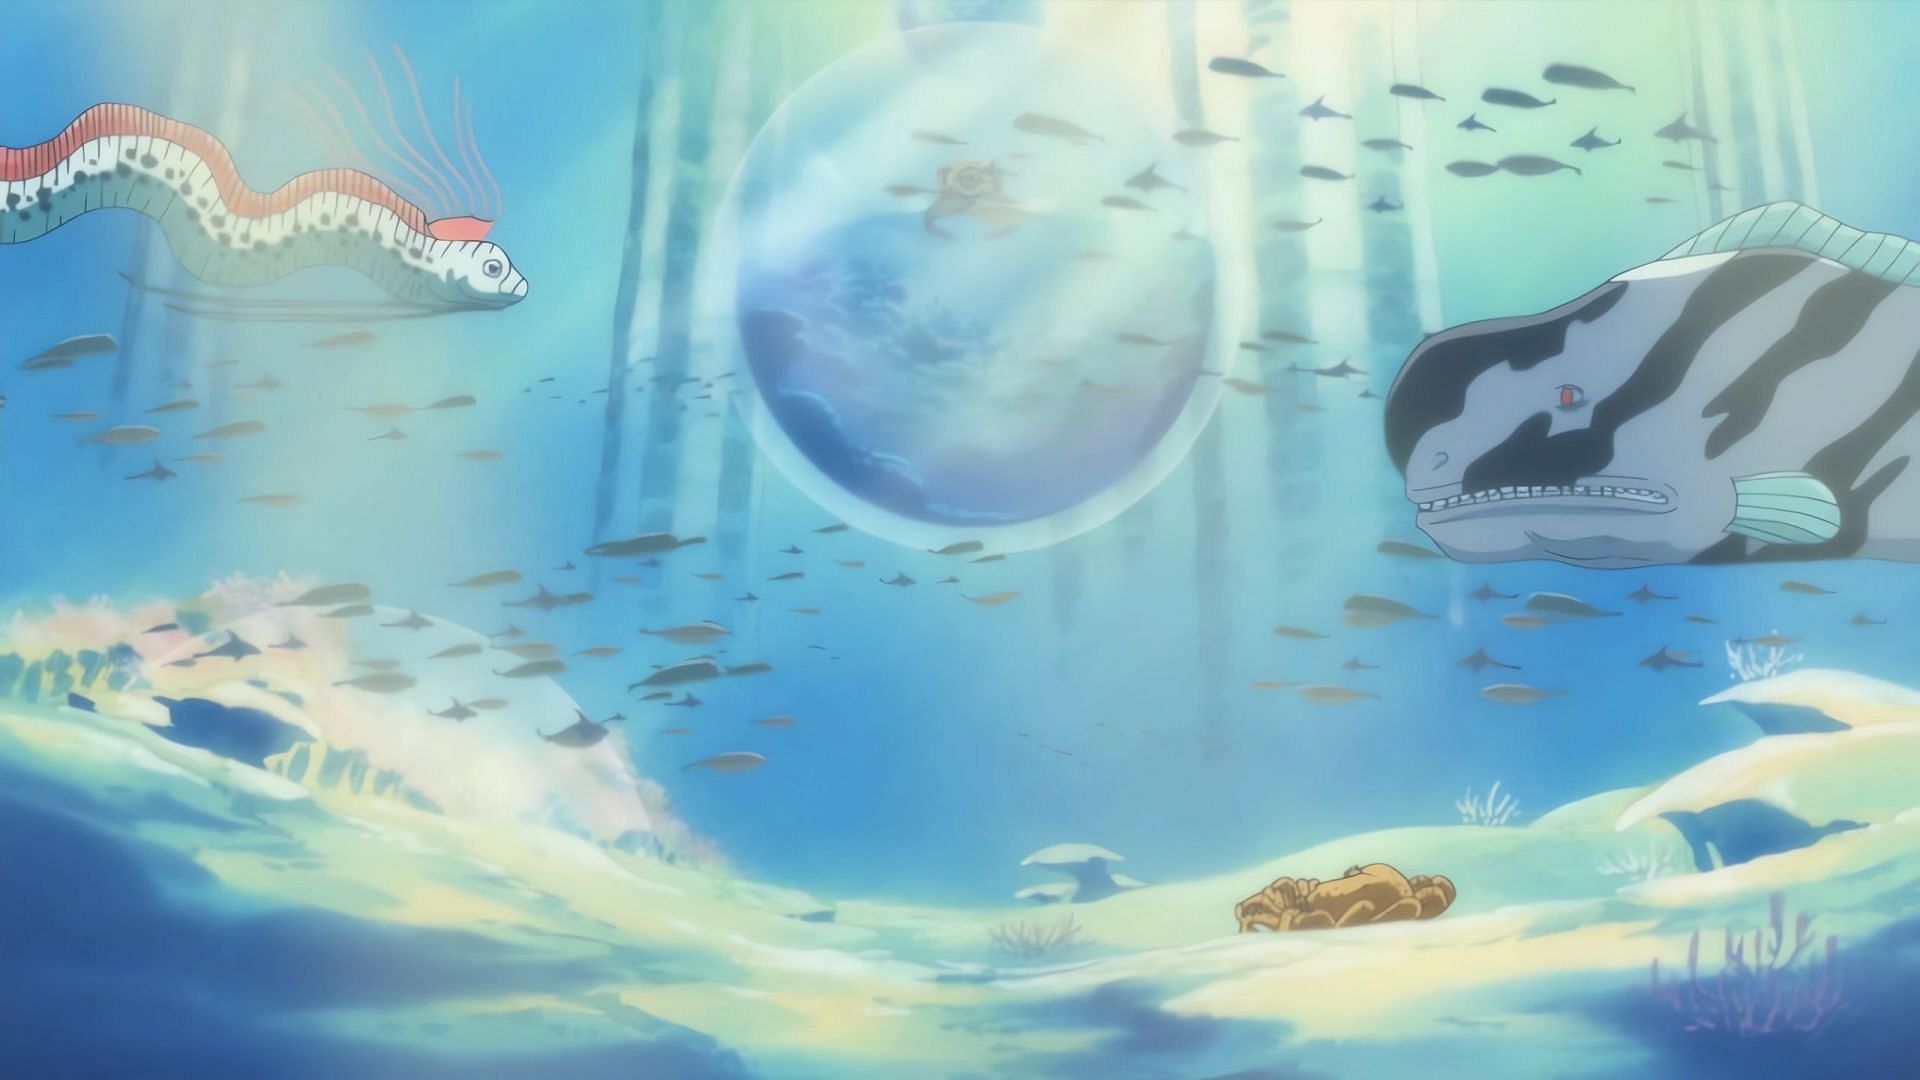 Fisherman Island as seen in the anime (Image via Toei Animation)